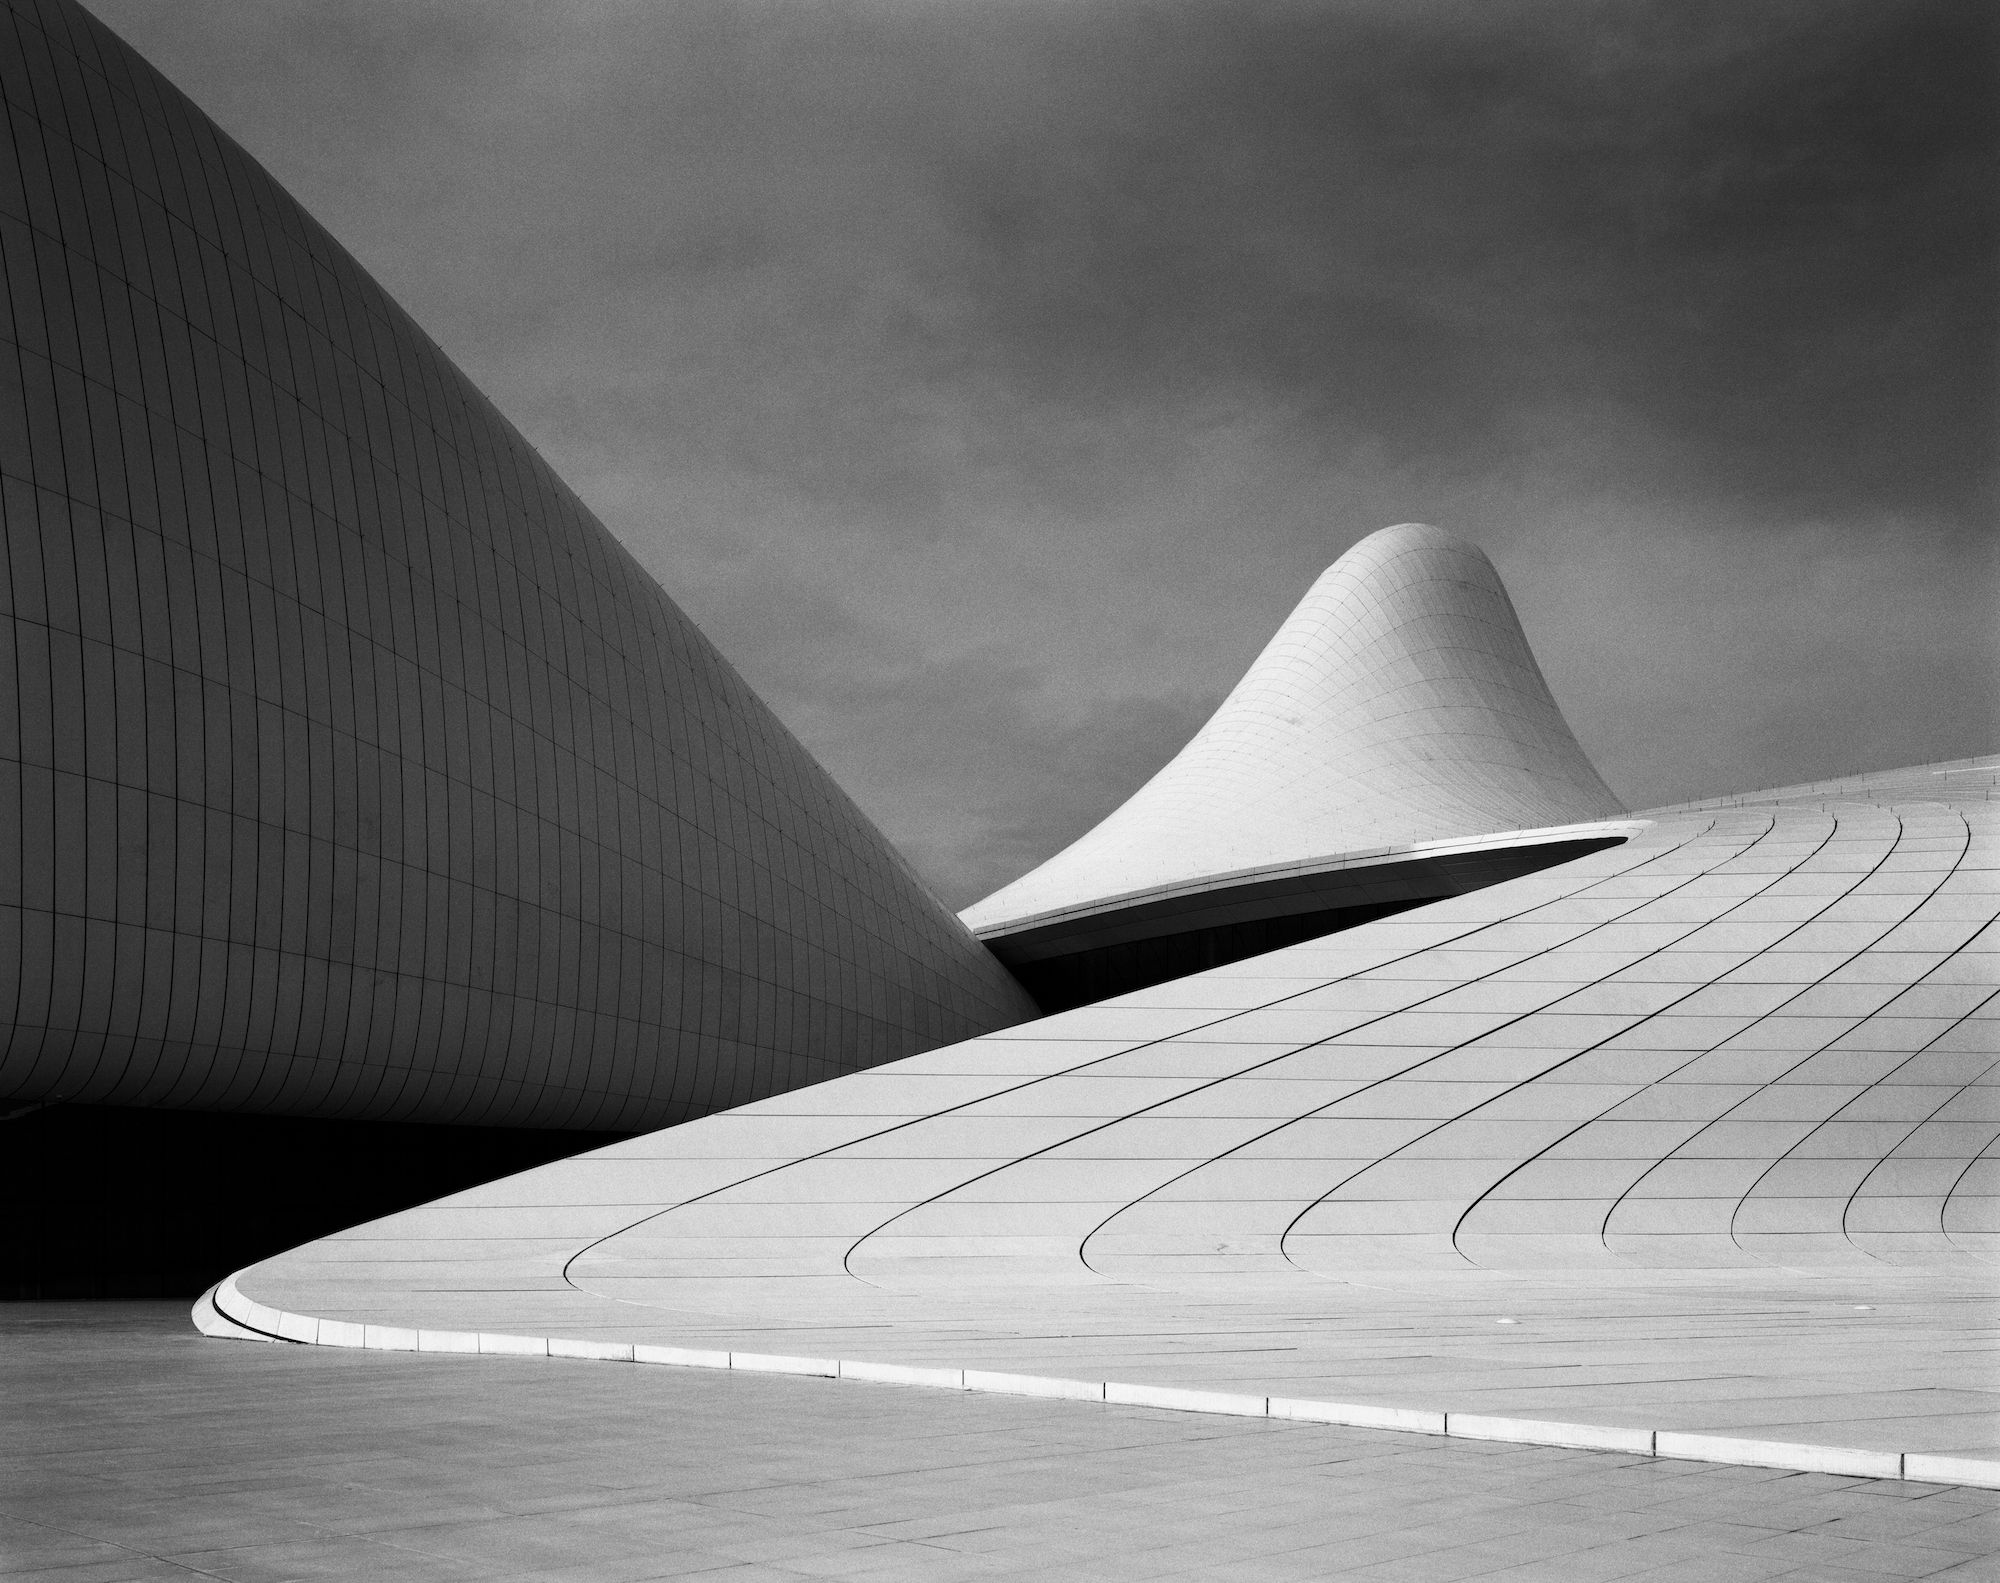 © Hélène Binet 'Heydar Aliyev Center, Baku 02' (Architecture by Zaha Hadid) courtesy ammann//gallery